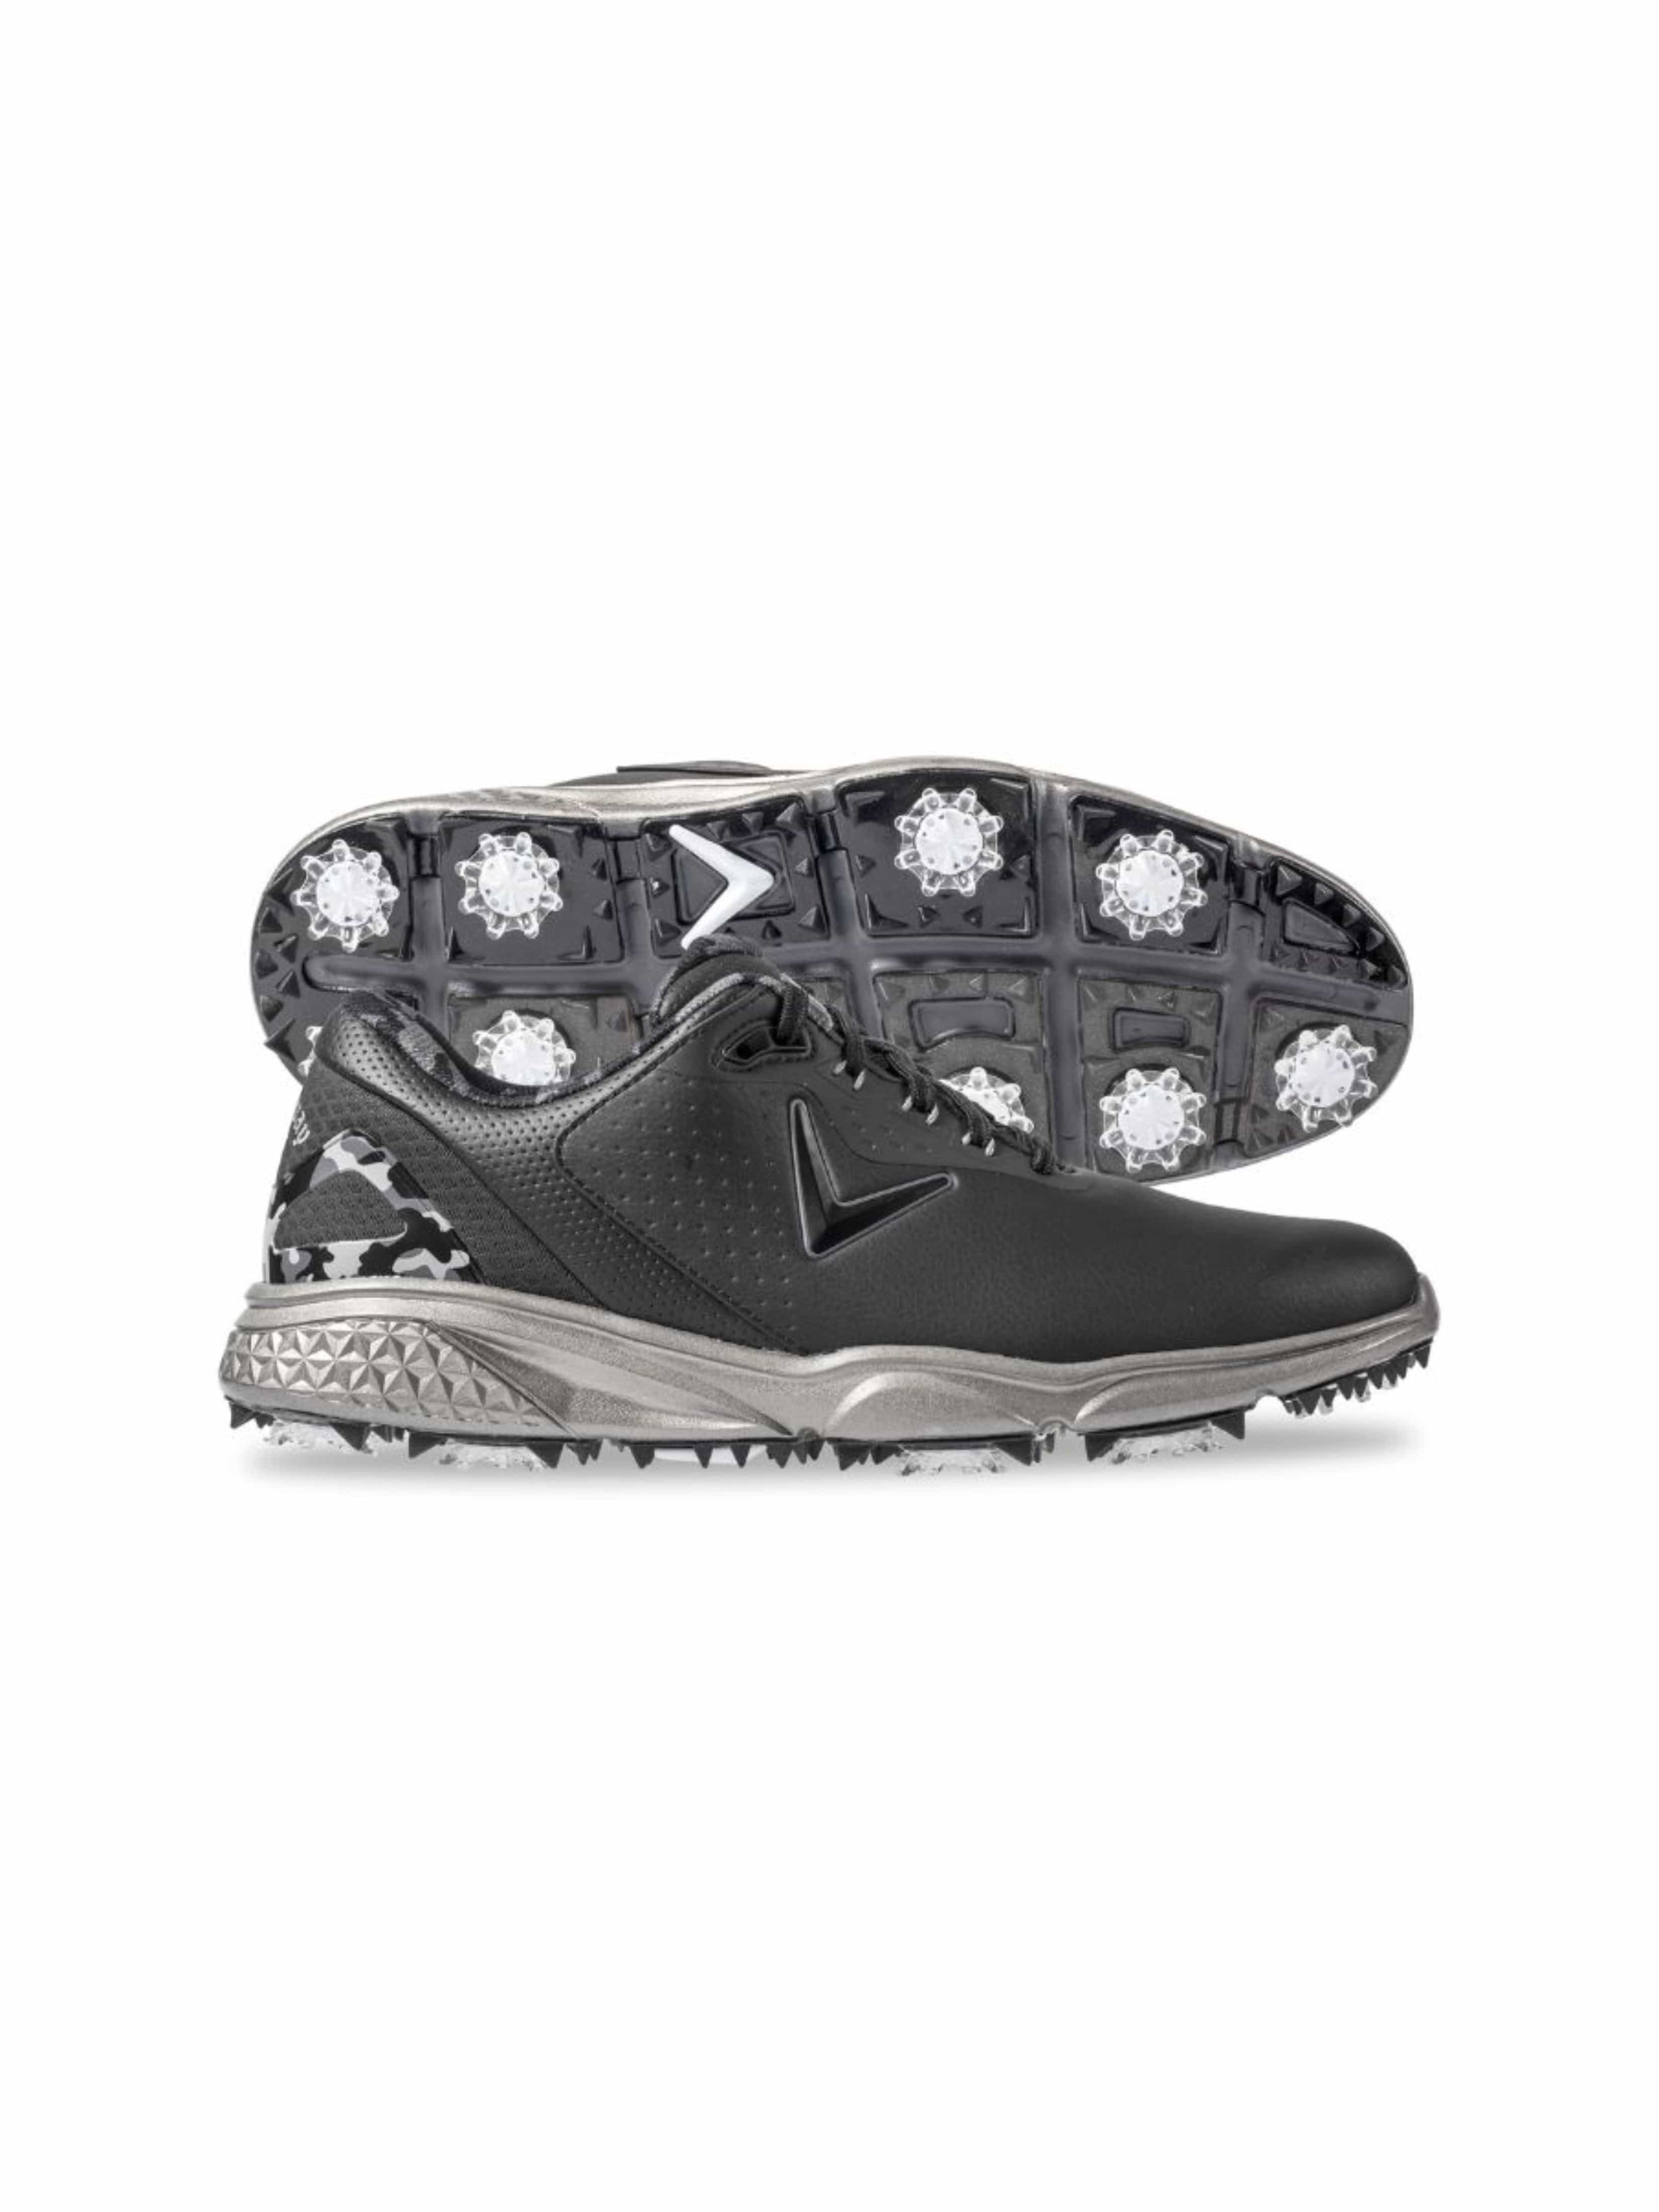 Callaway Apparel Mens Coronado V2 Golf Shoes, Size 10.5, Black, Polyurethane/Nylon | Golf Apparel Shop